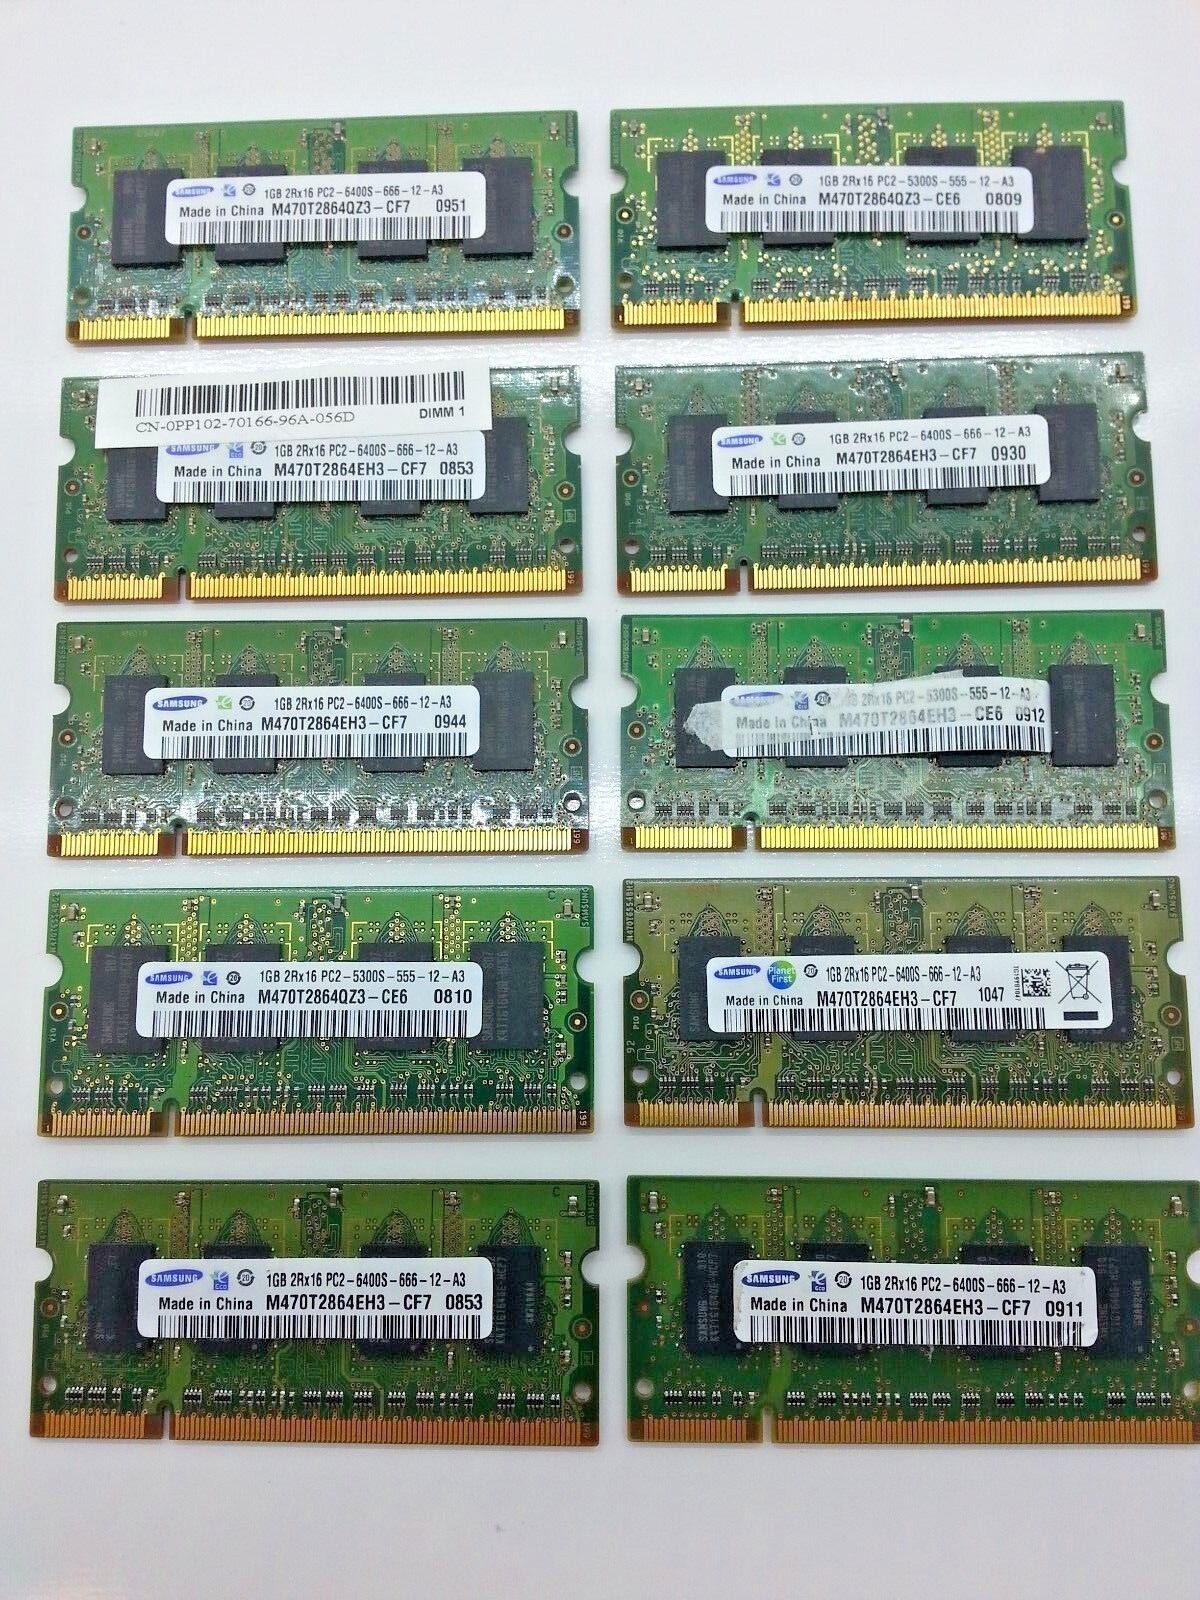 Lot of 10 Samsung 1GB 2Rx16 PC2-6400S-666 PC2-5300S-555 Mix Genuine Memory Ram 1